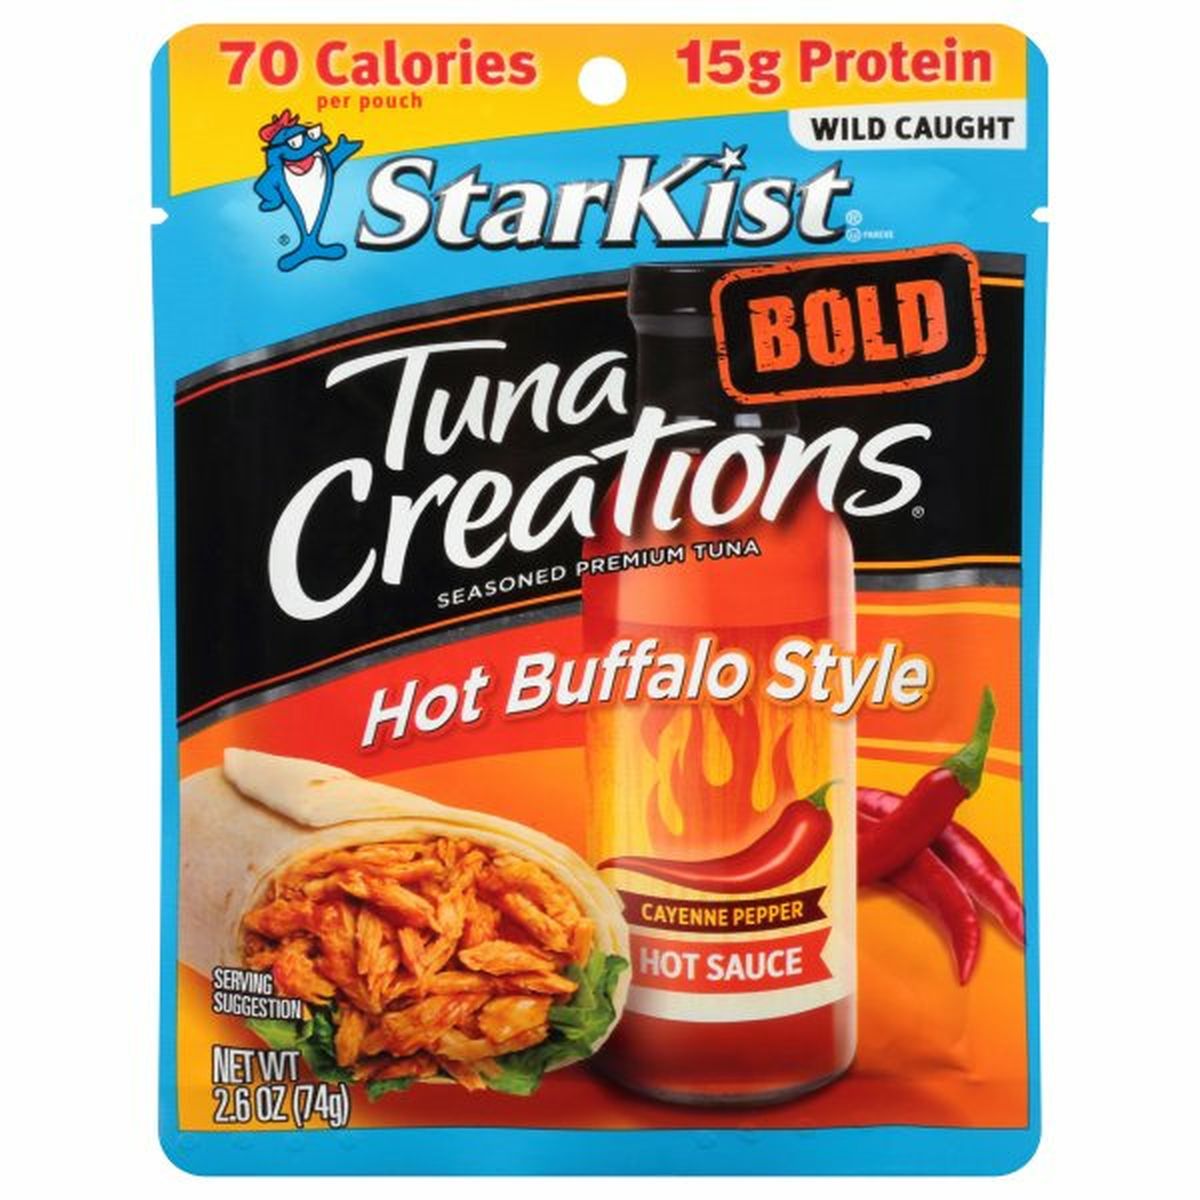 Calories in StarKist Tuna Creations Tuna, Premium, Hot Buffalo Style, Bold, Seasoned